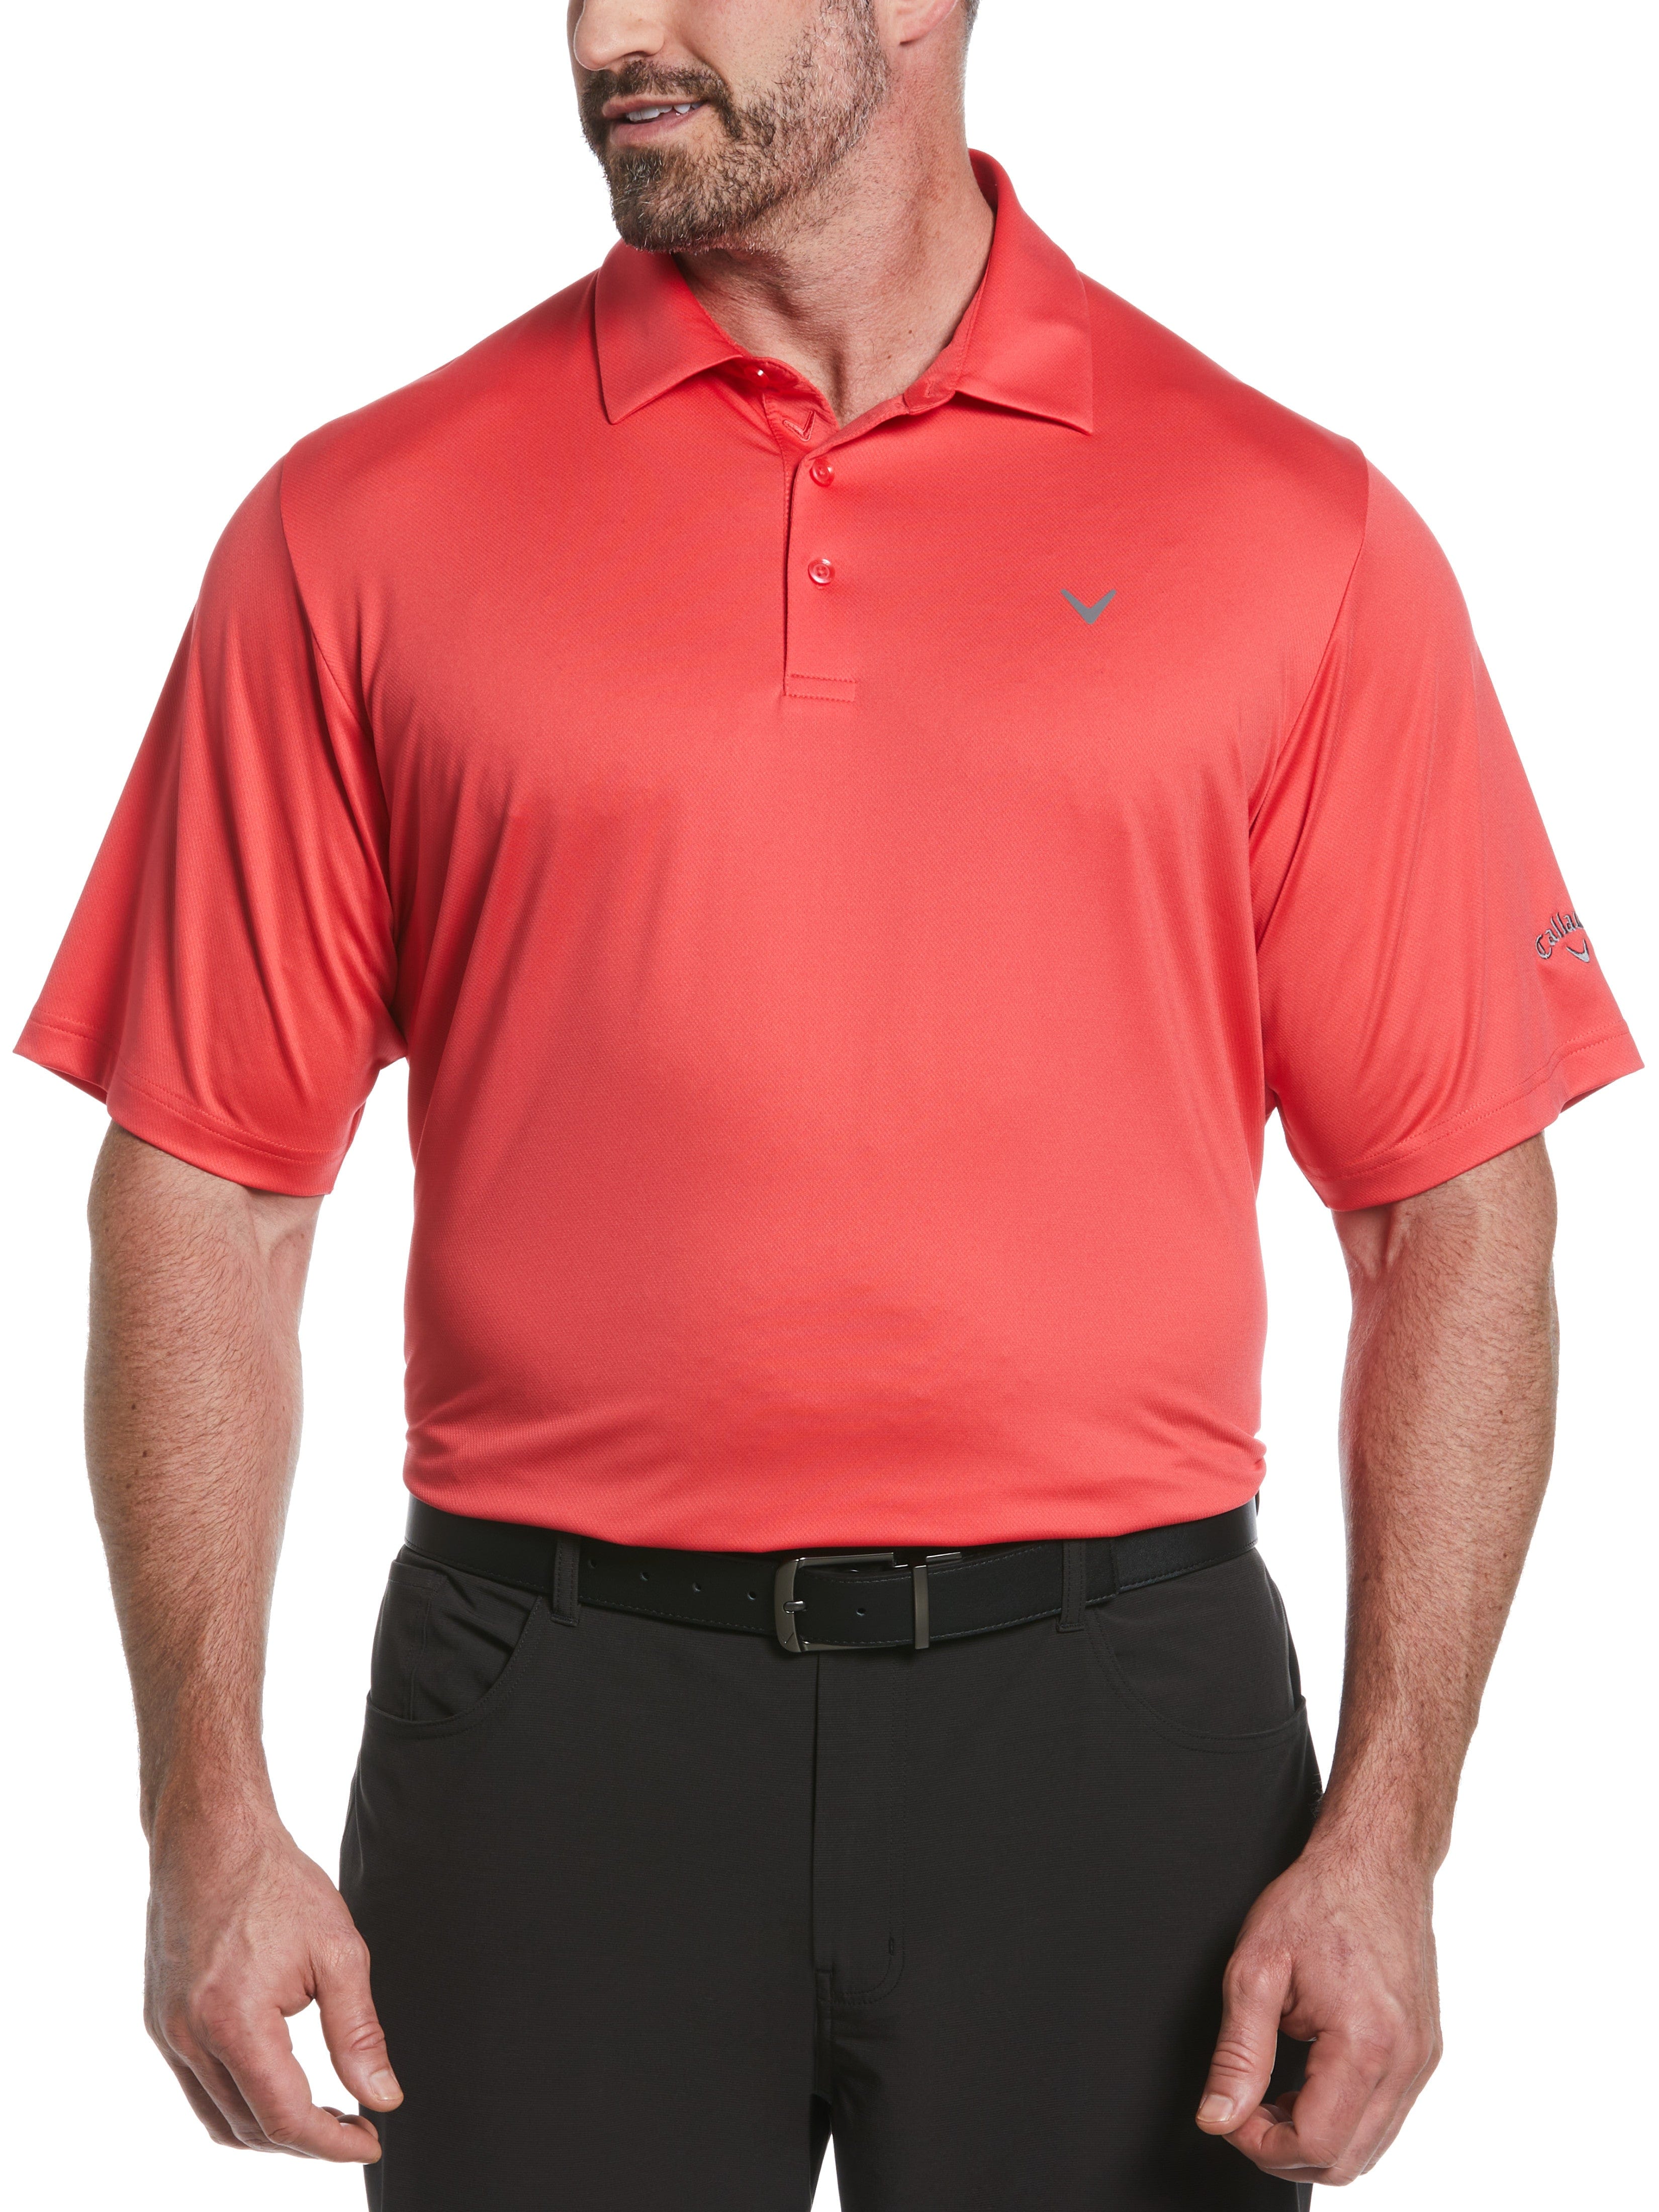 Callaway Apparel Mens Big & Tall Solid Swing Tech Golf Polo Shirt, Size 5XLT, Teaberry Pink, Polyester/Elastane | Golf Apparel Shop